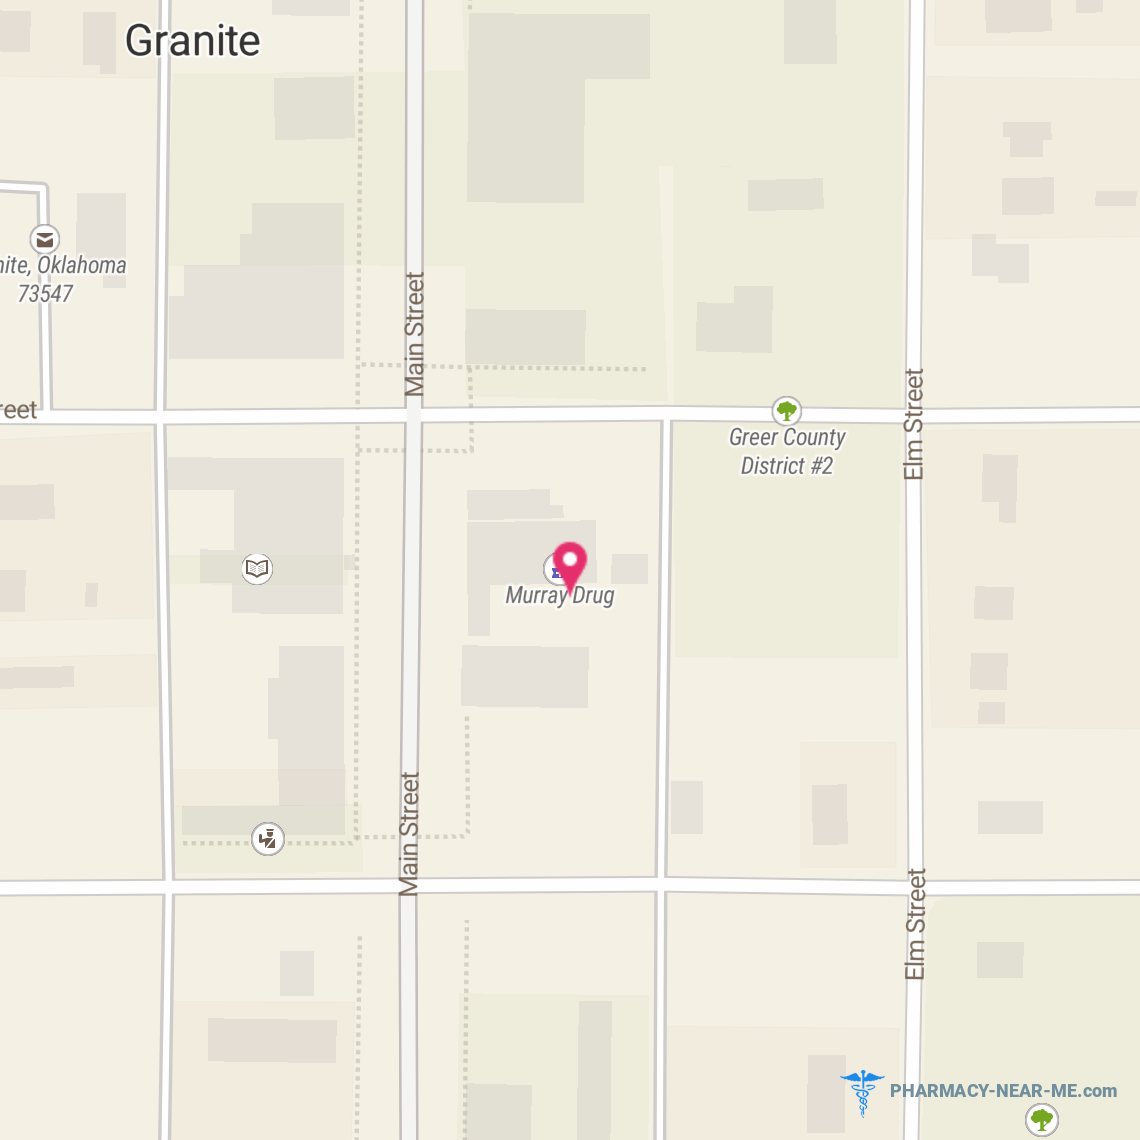 GRANITE DRUG CO. - Pharmacy Hours, Phone, Reviews & Information: 316 Main Street, Granite, Oklahoma 73547, United States